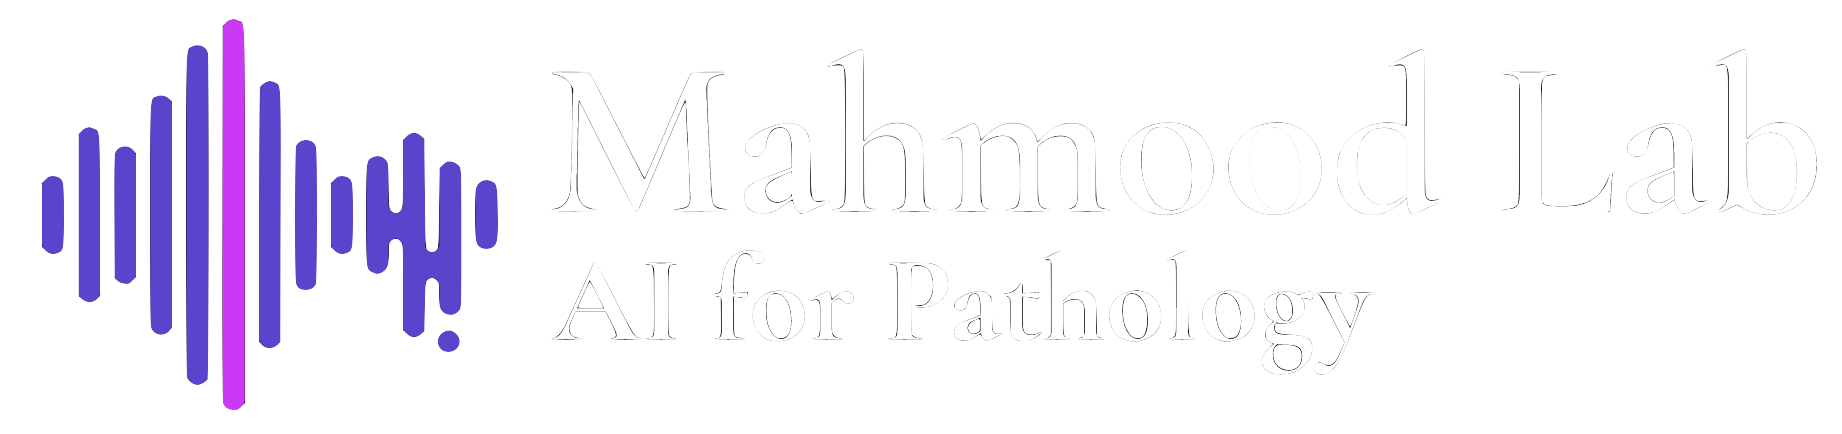 Mahmood Lab logo